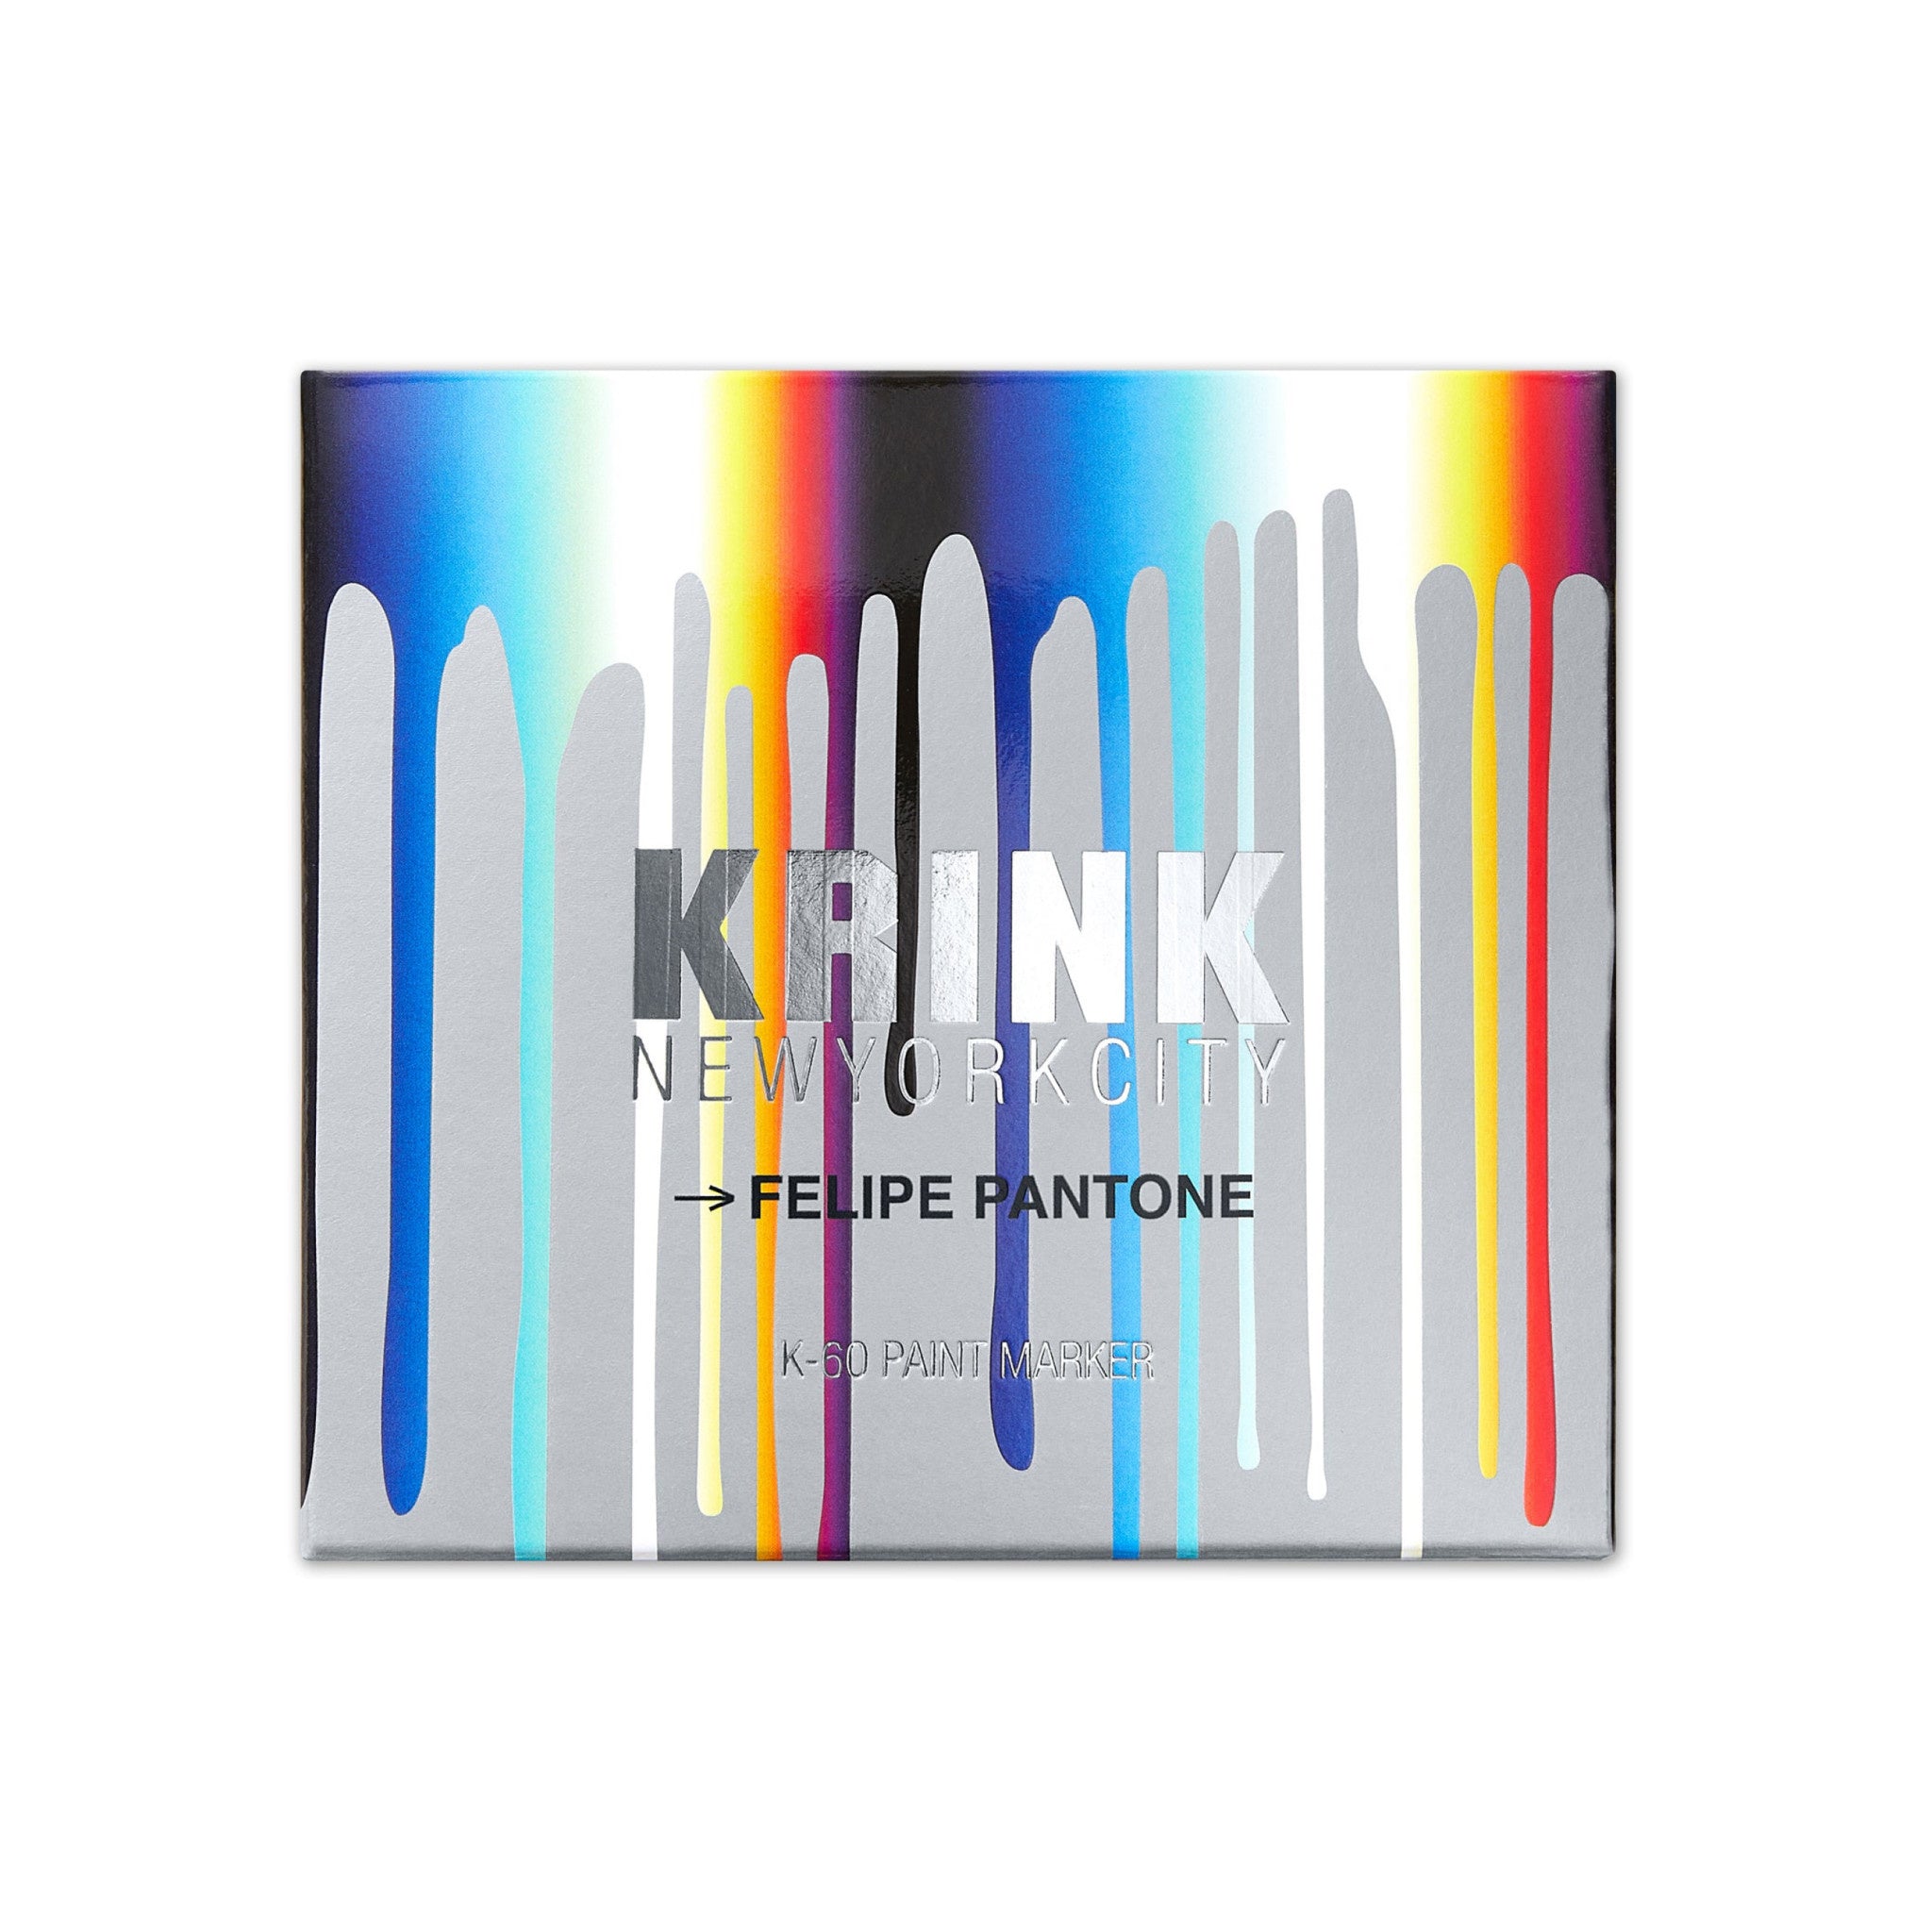 KRINK x Felipe Pantone K-60 Paint Marker Box Set - Wynwood Walls Shop